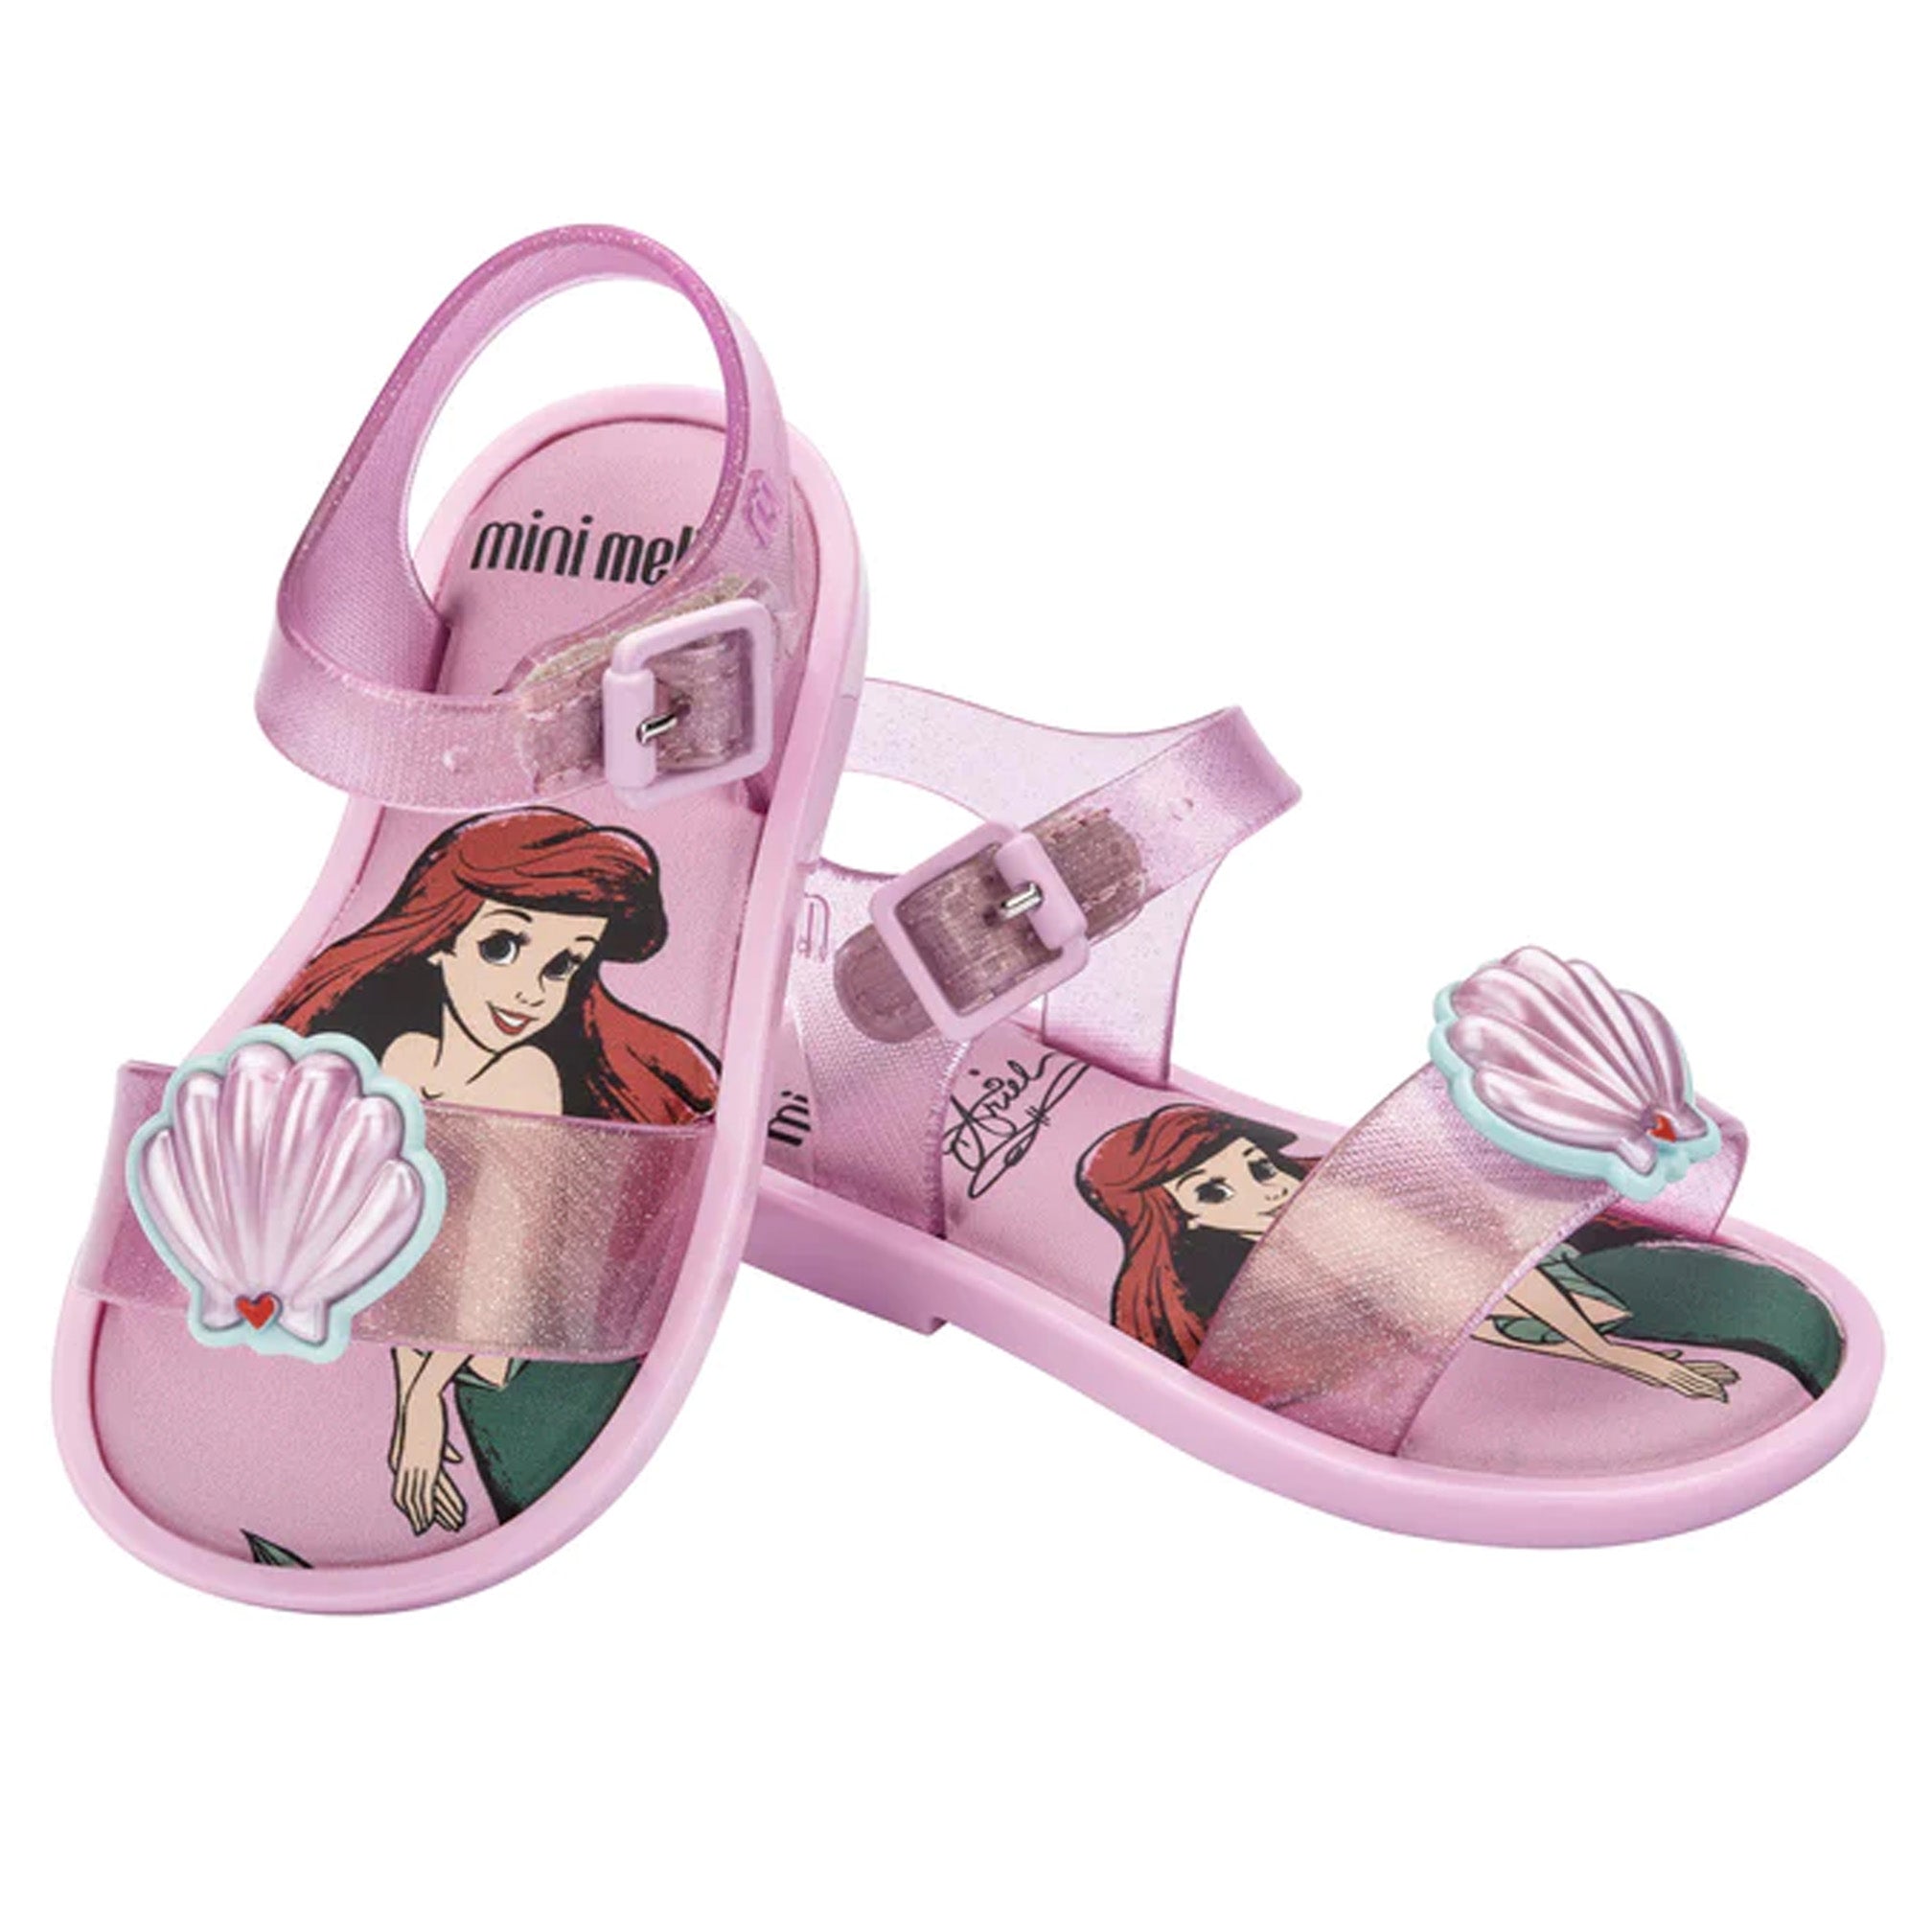 Mini Melissa Mar Sandal + Disney Princess Baby